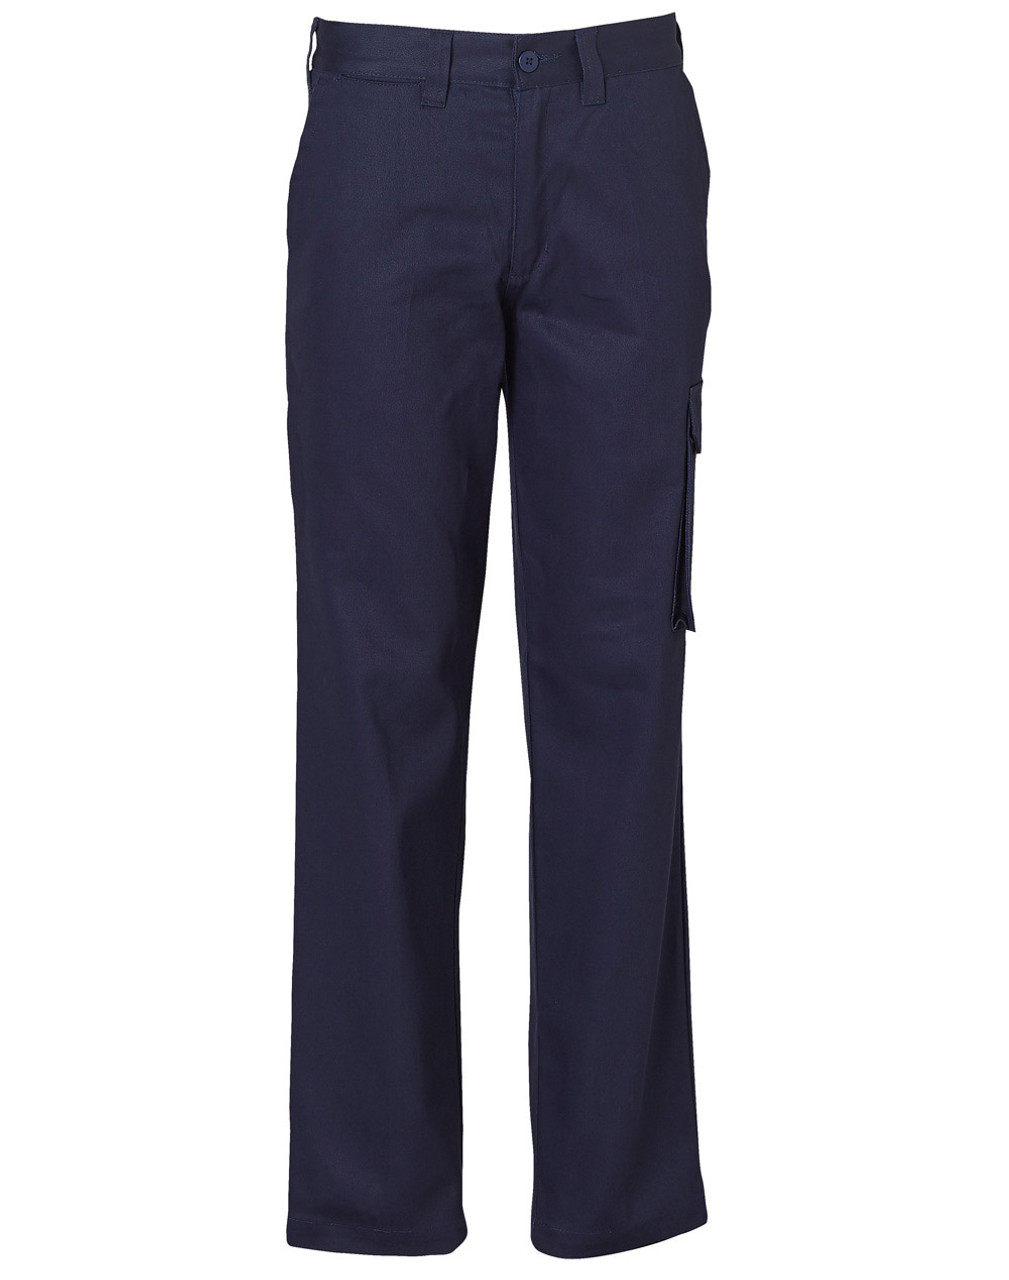 3321 - Ladies Cotton Drill Work Pants - Online Workwear